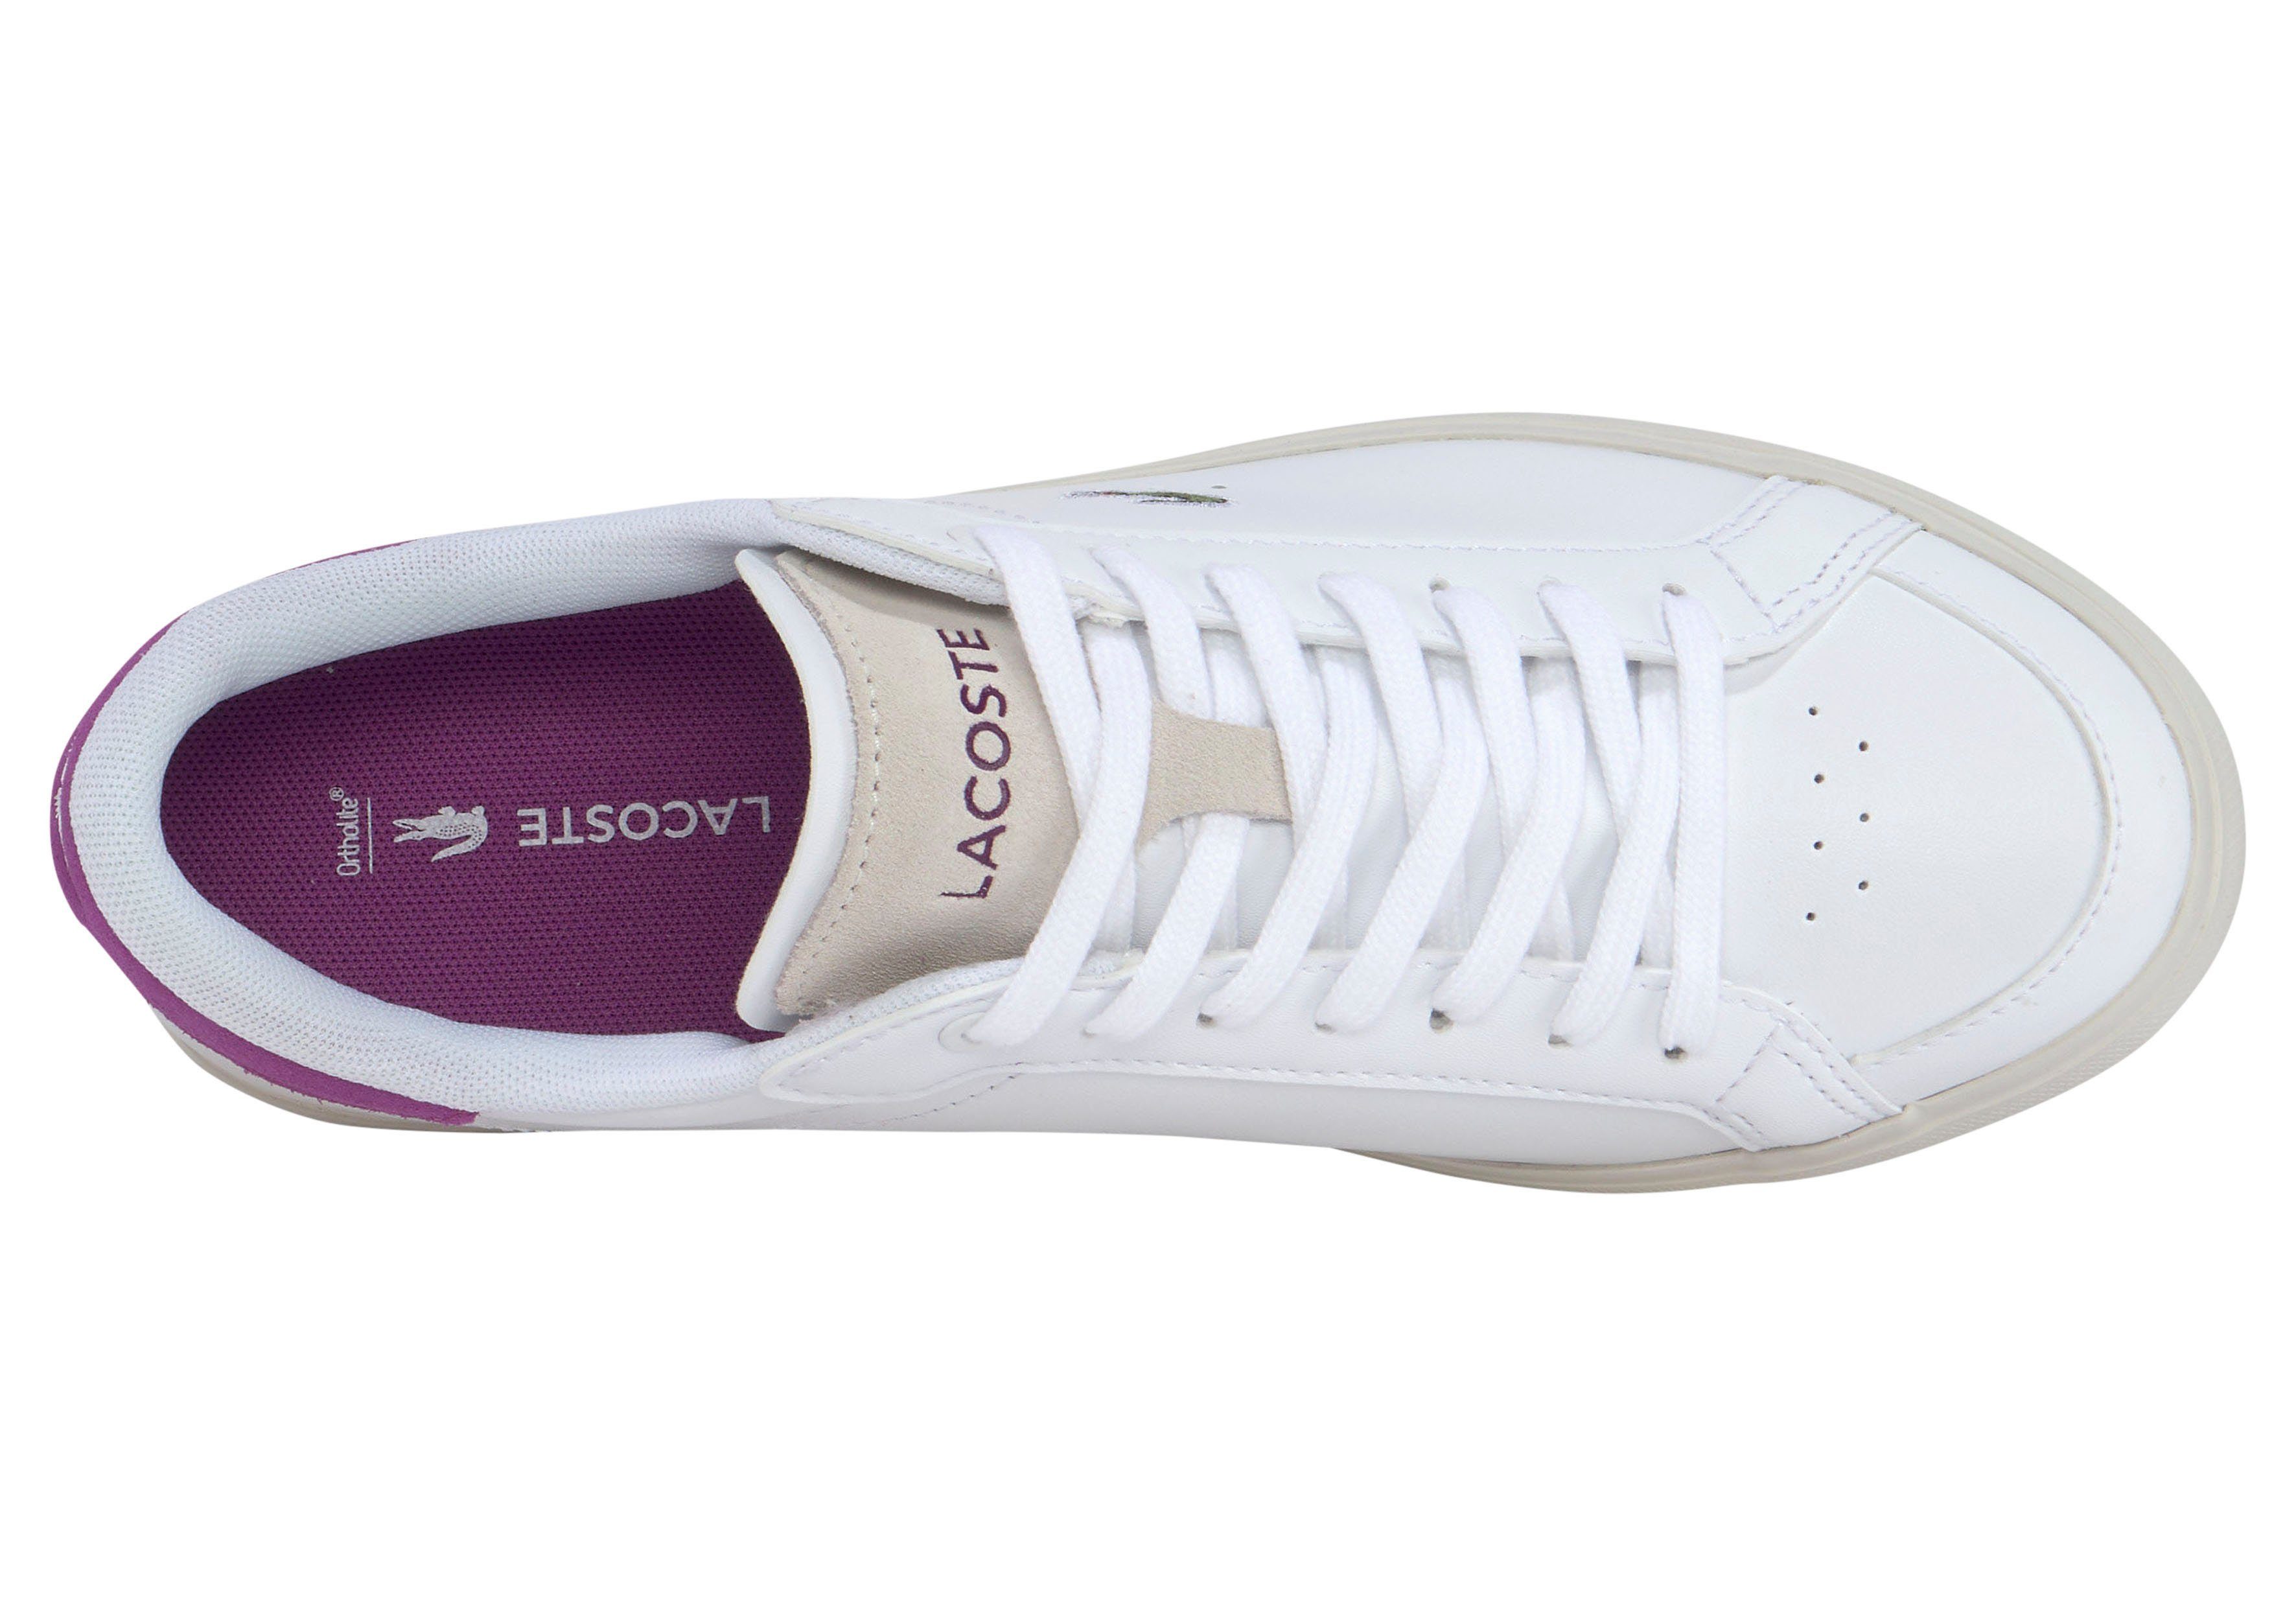 Lacoste POWERCOURT 123 1 Sneaker SFA white/pur